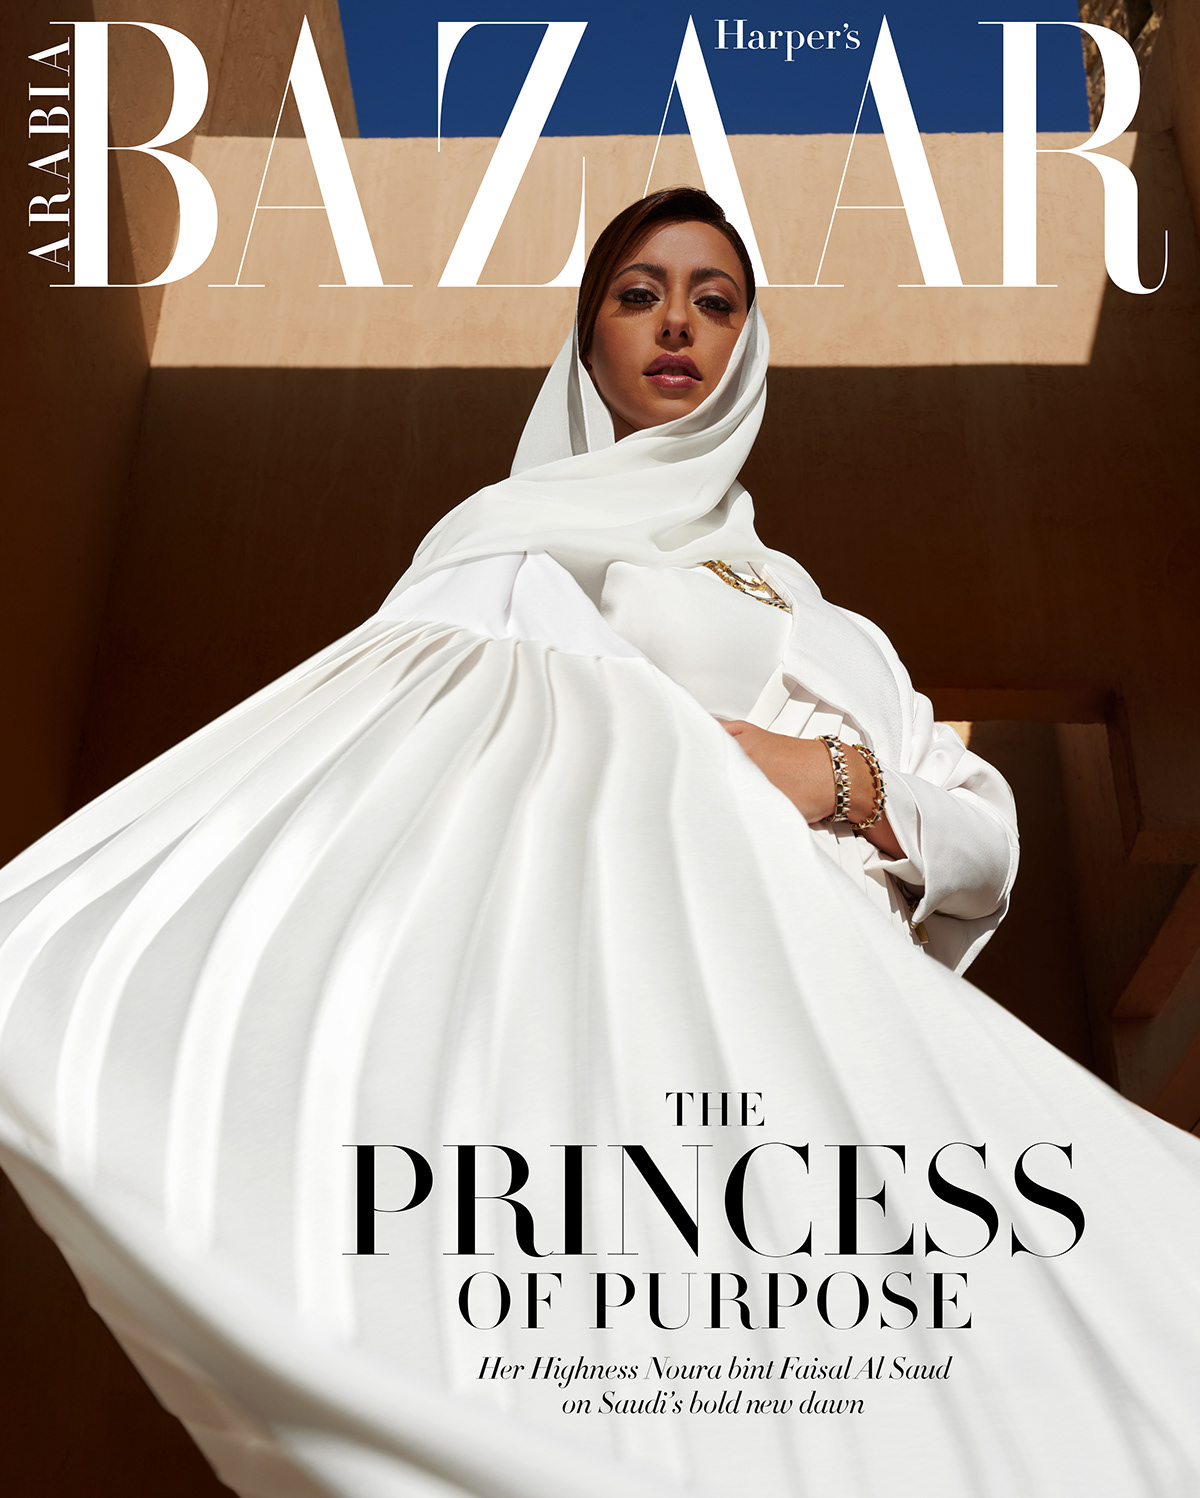 Harper's Bazaar Arabia Cover Magazine | Behance